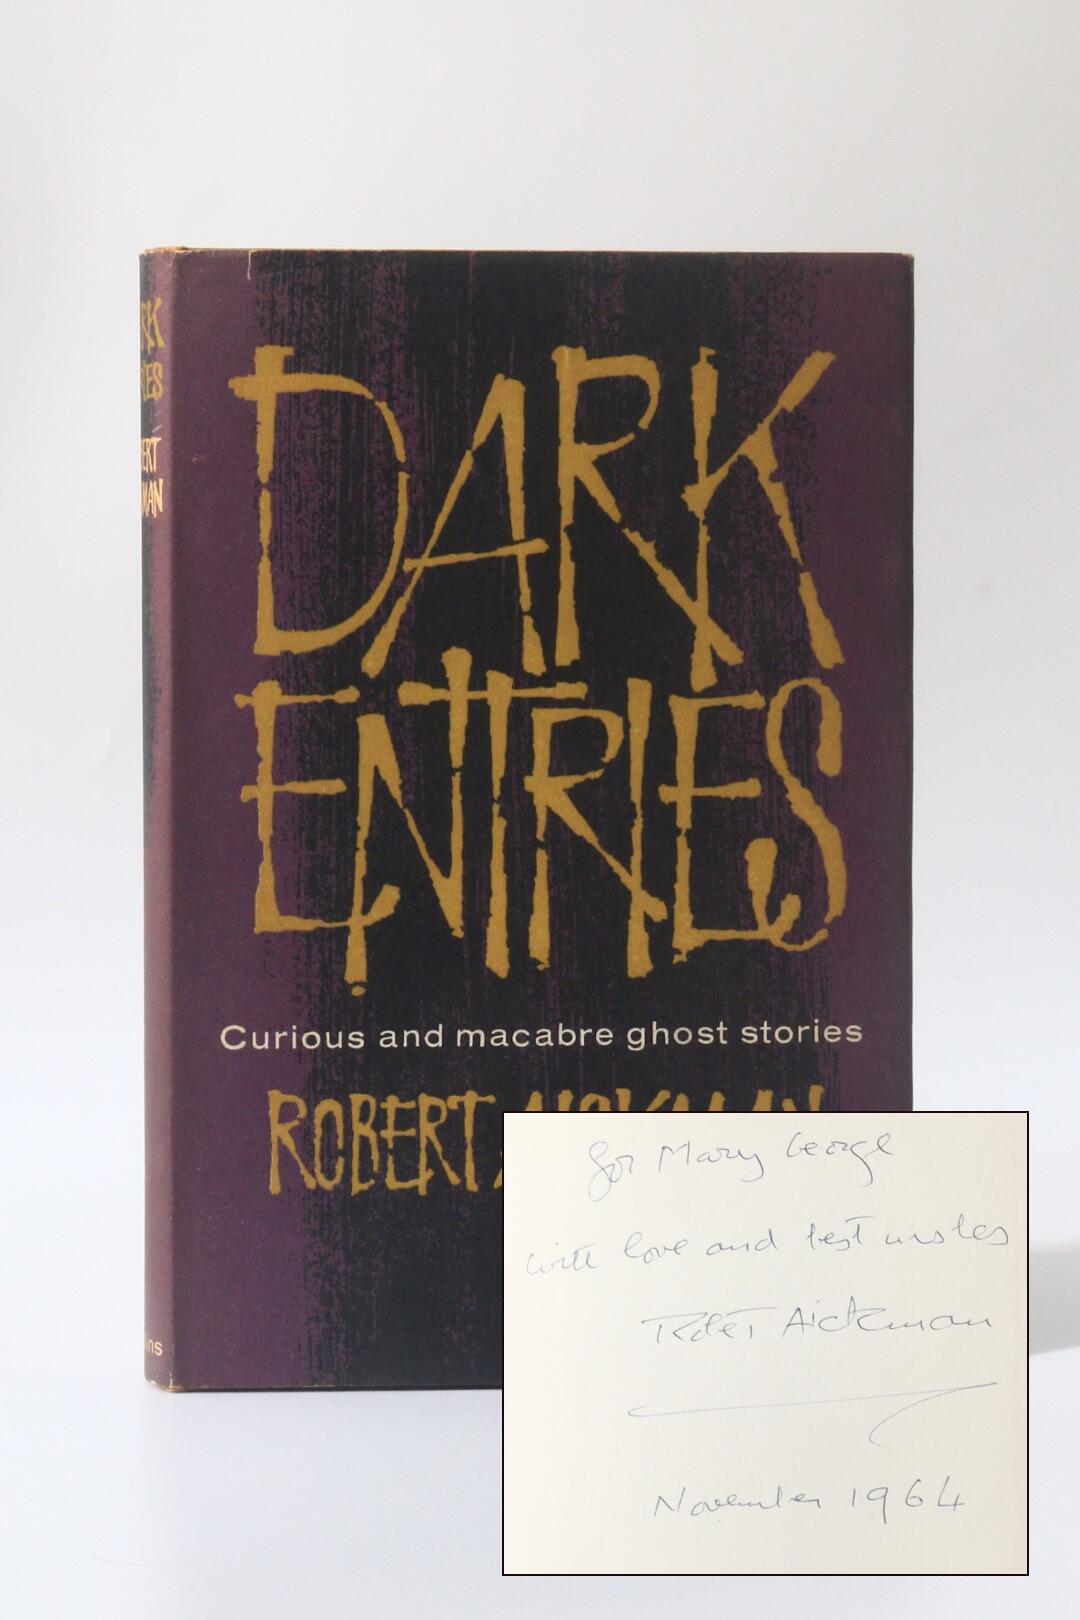 Robert Aickman - Dark Entries - Collins, 1964, Signed First Edition.